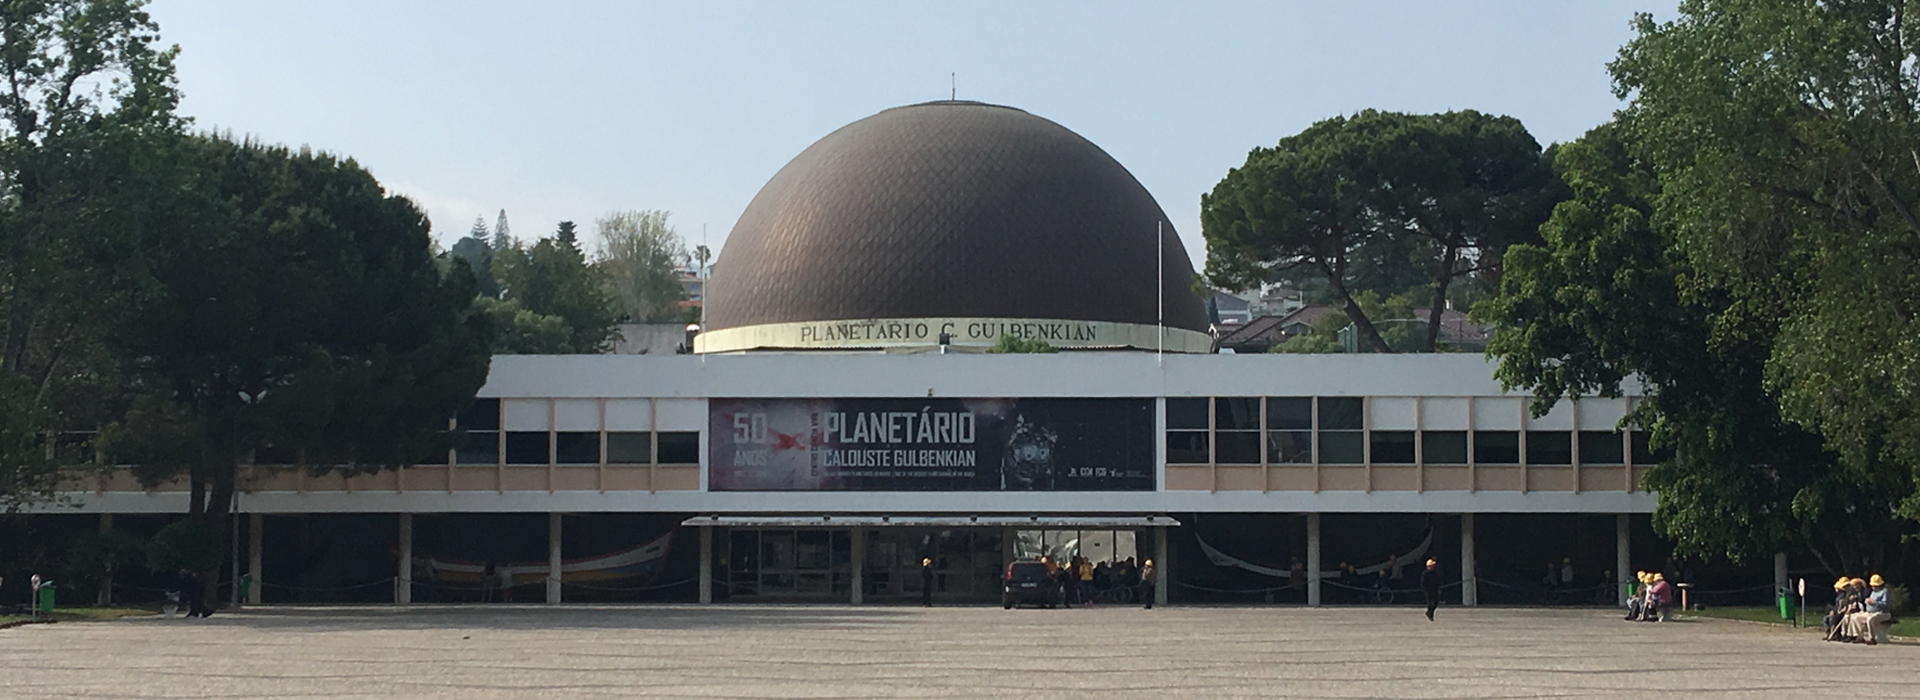 Planetarium (Planetário) Calouste Gulbenkian